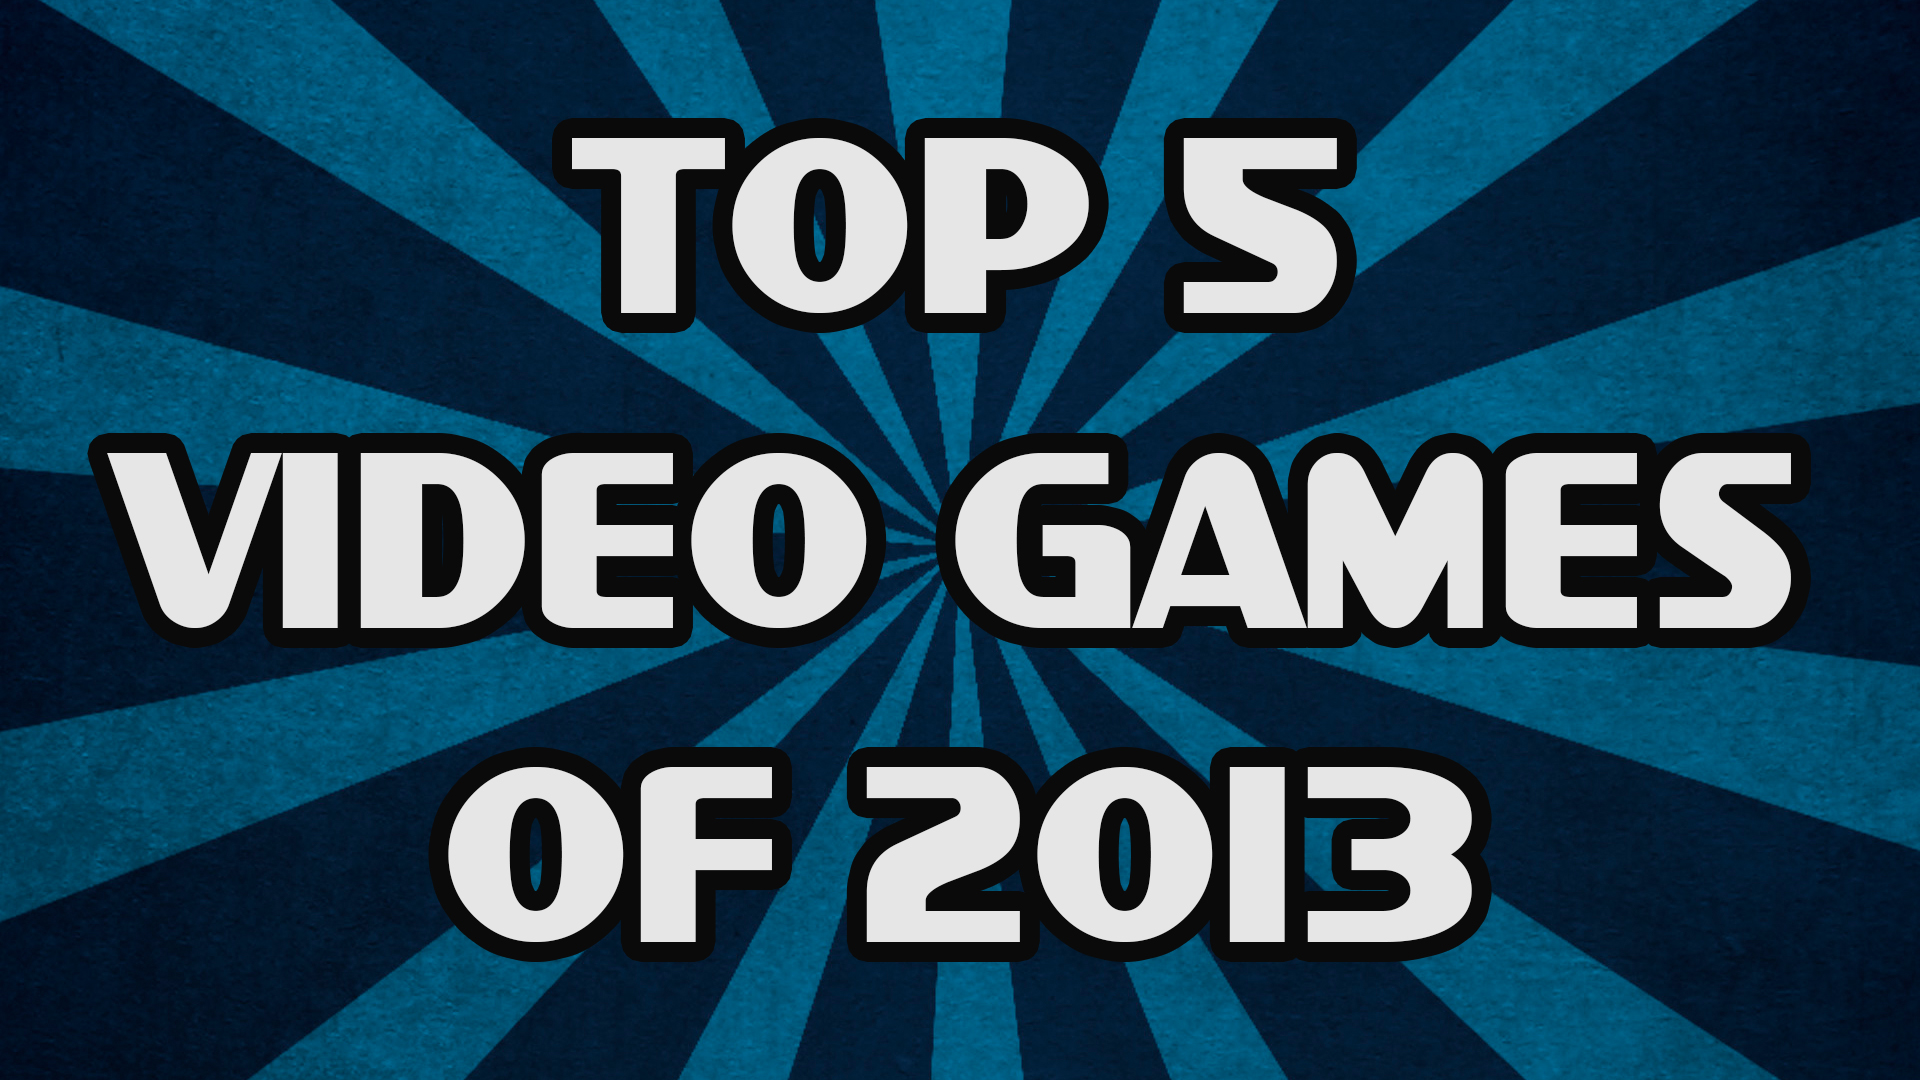 Top 5 Video Games of 2013